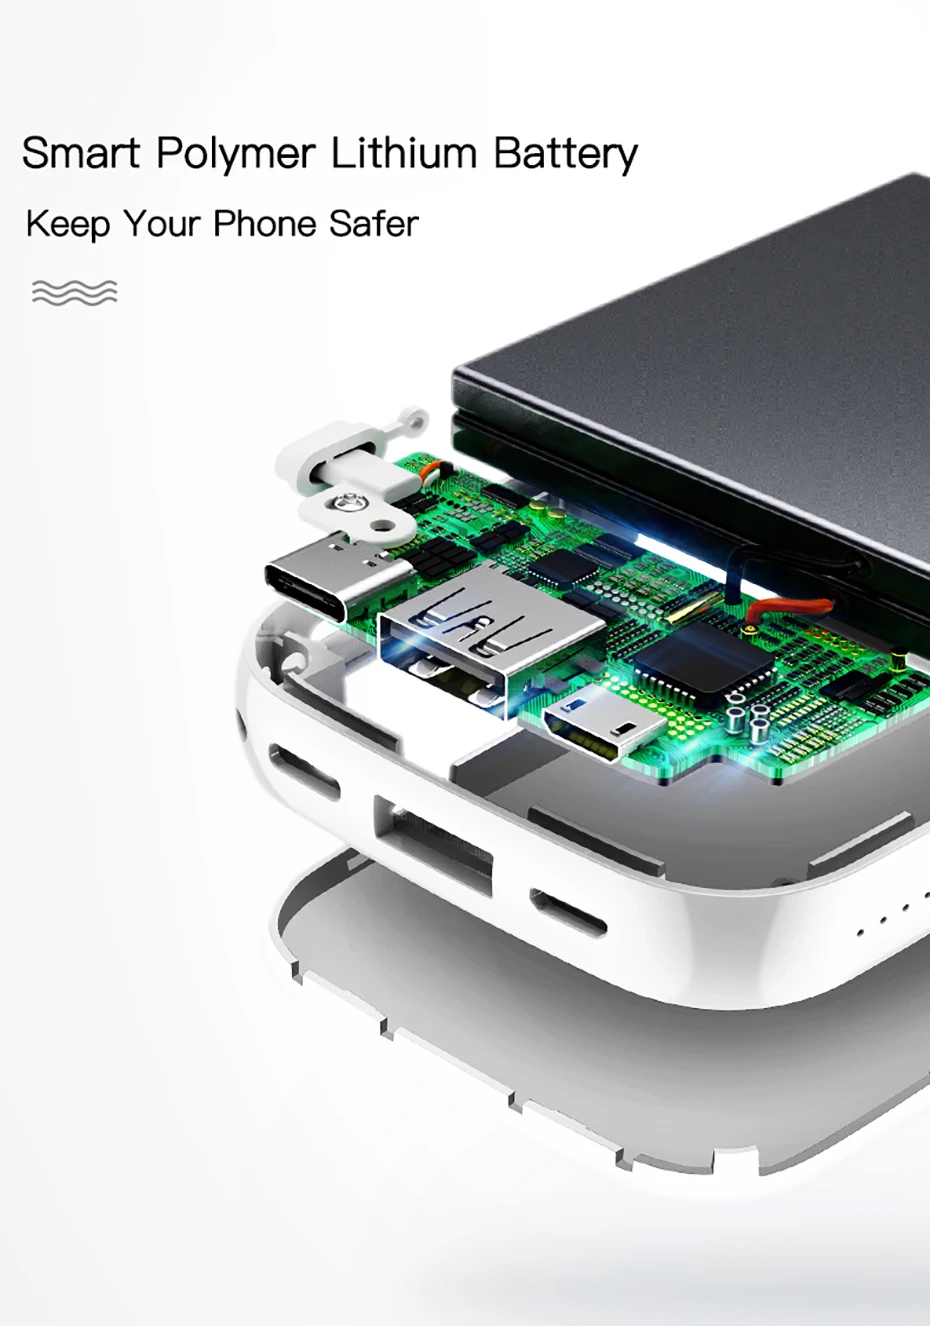 Baseus mi ni power Bank 10000 мАч для iPhone X Xs Max портативный внешний аккумулятор power bank для samsung S9 S8 Note9 Xiaomi mi 9